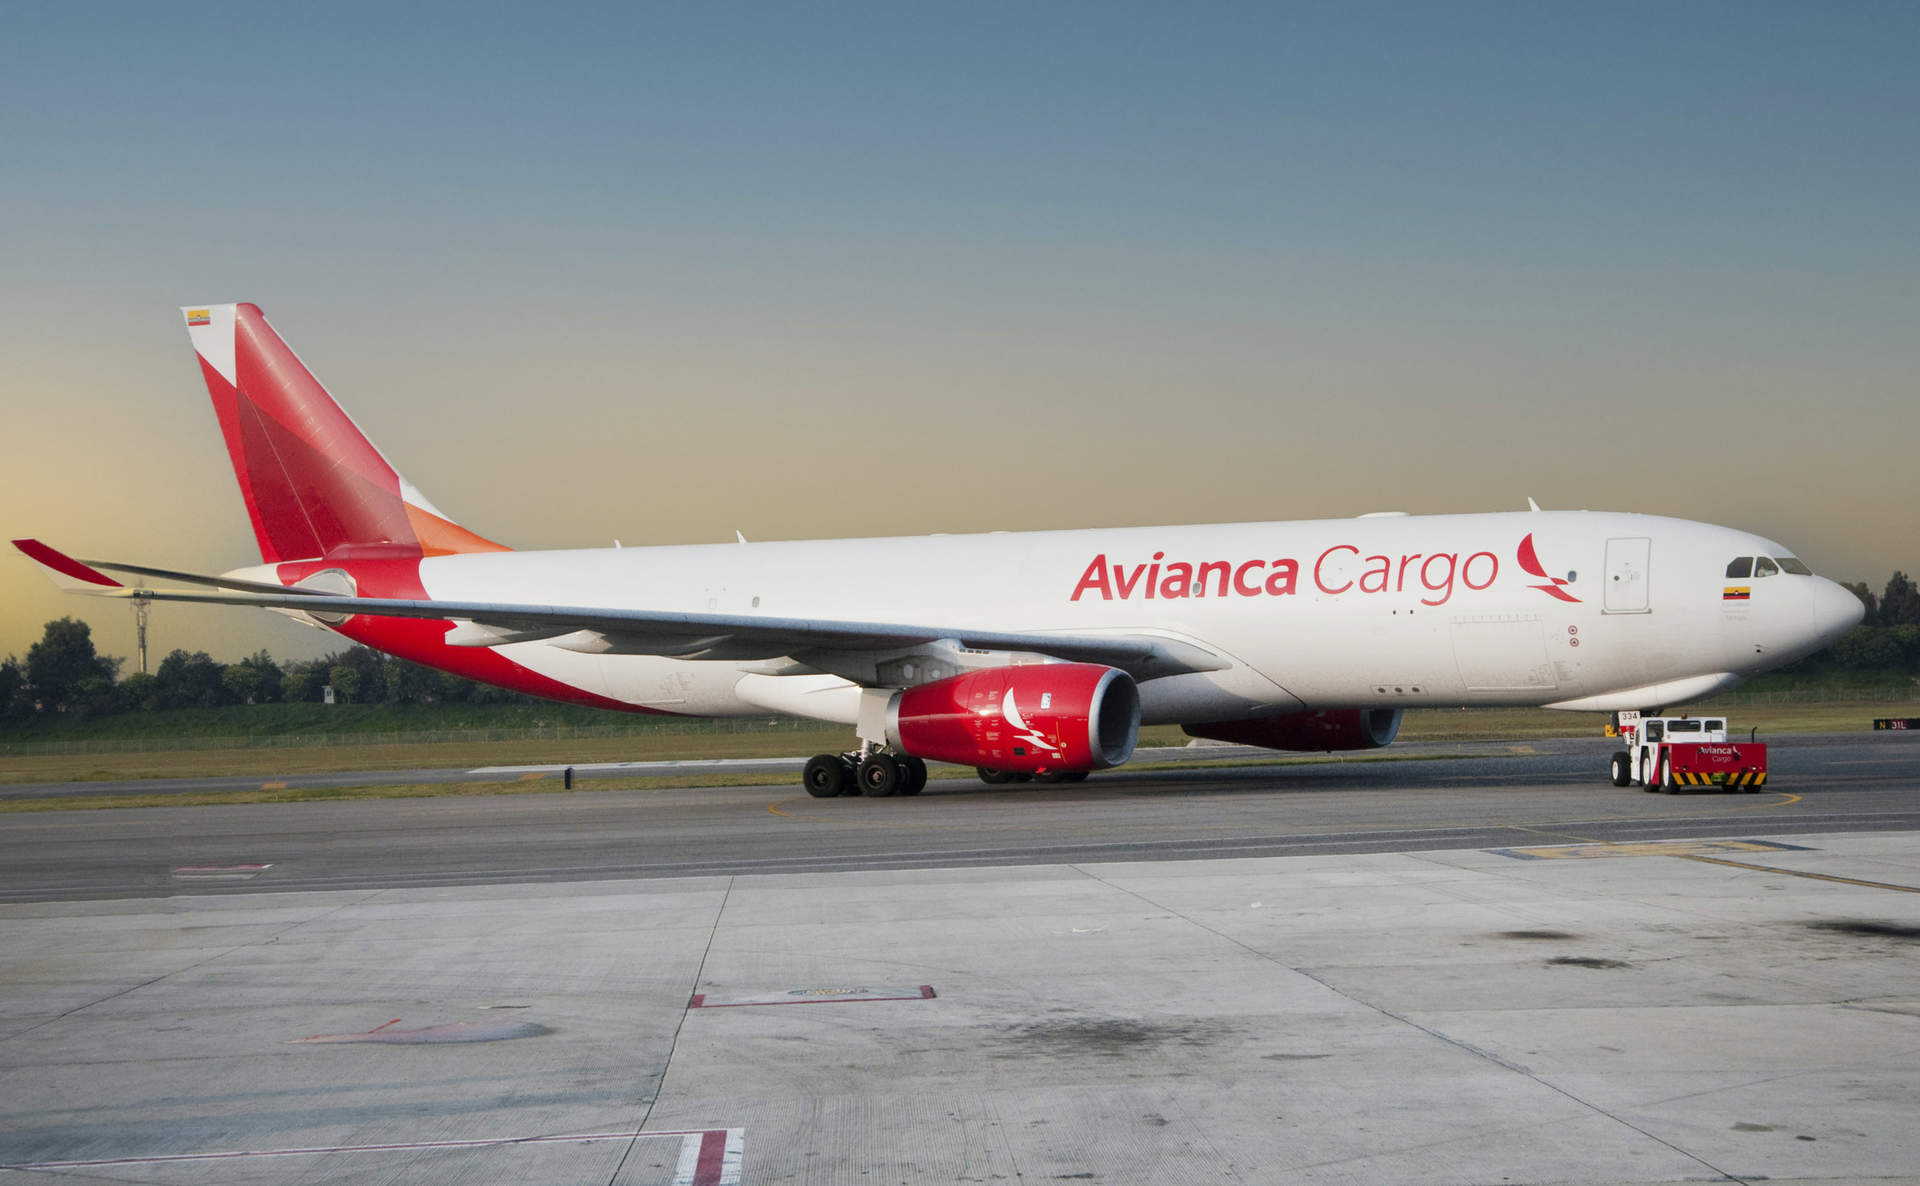 Avianca ofrece tarifas desde 198 euros para destinos internacionales desde España